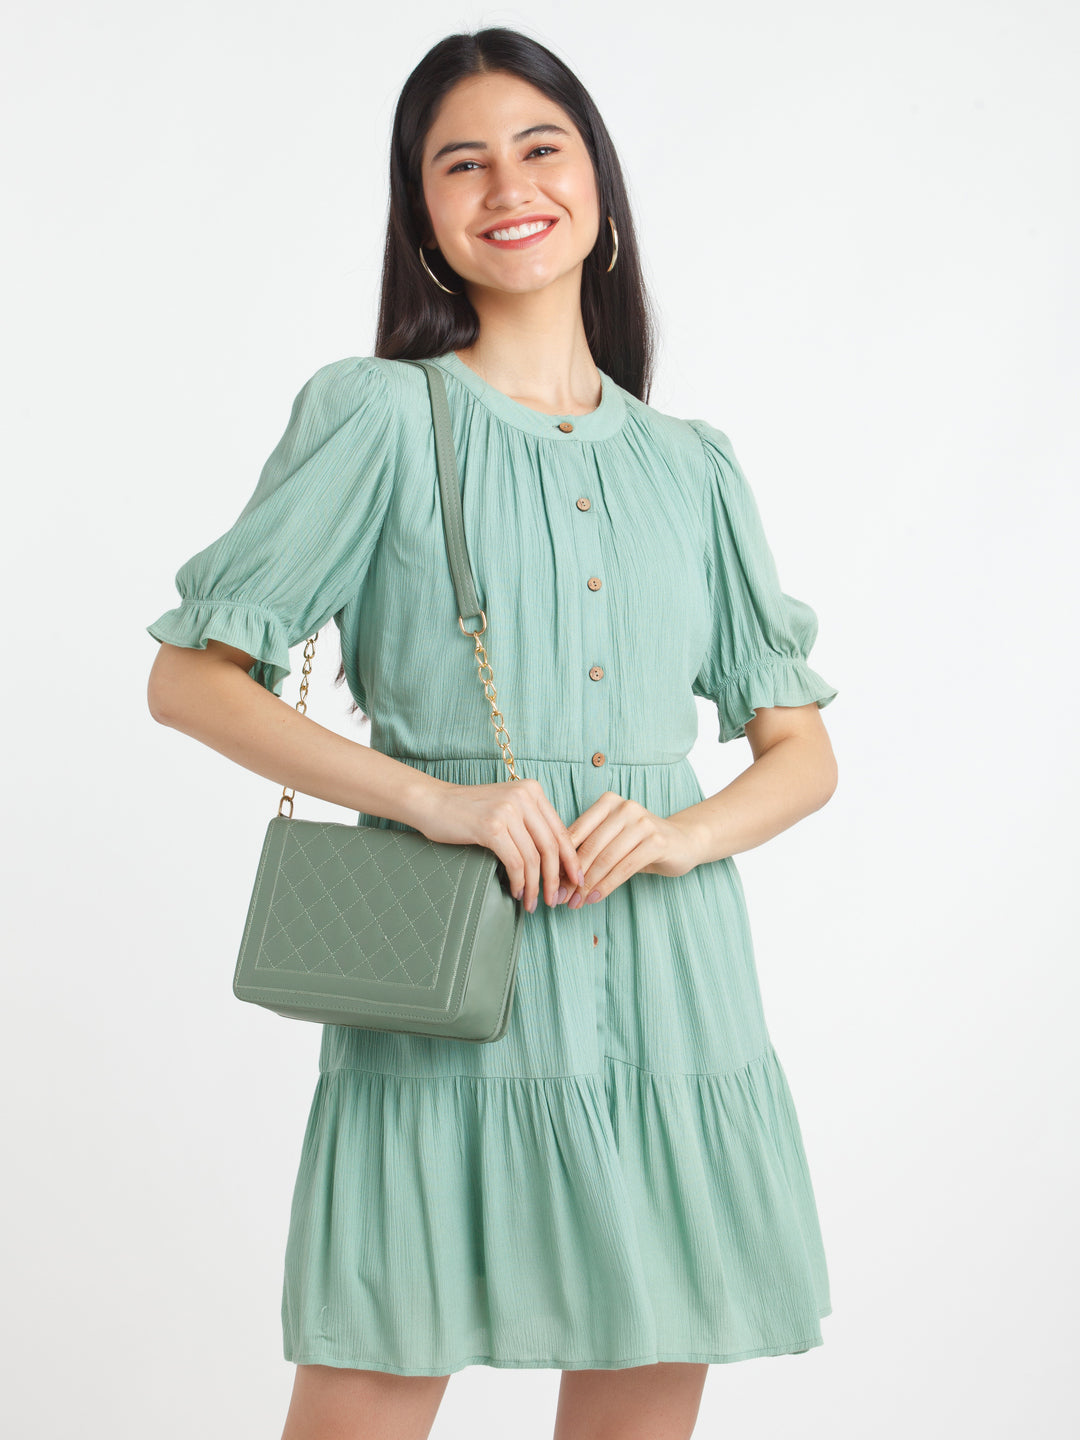 Green Solid A-Line Short Dress For Women